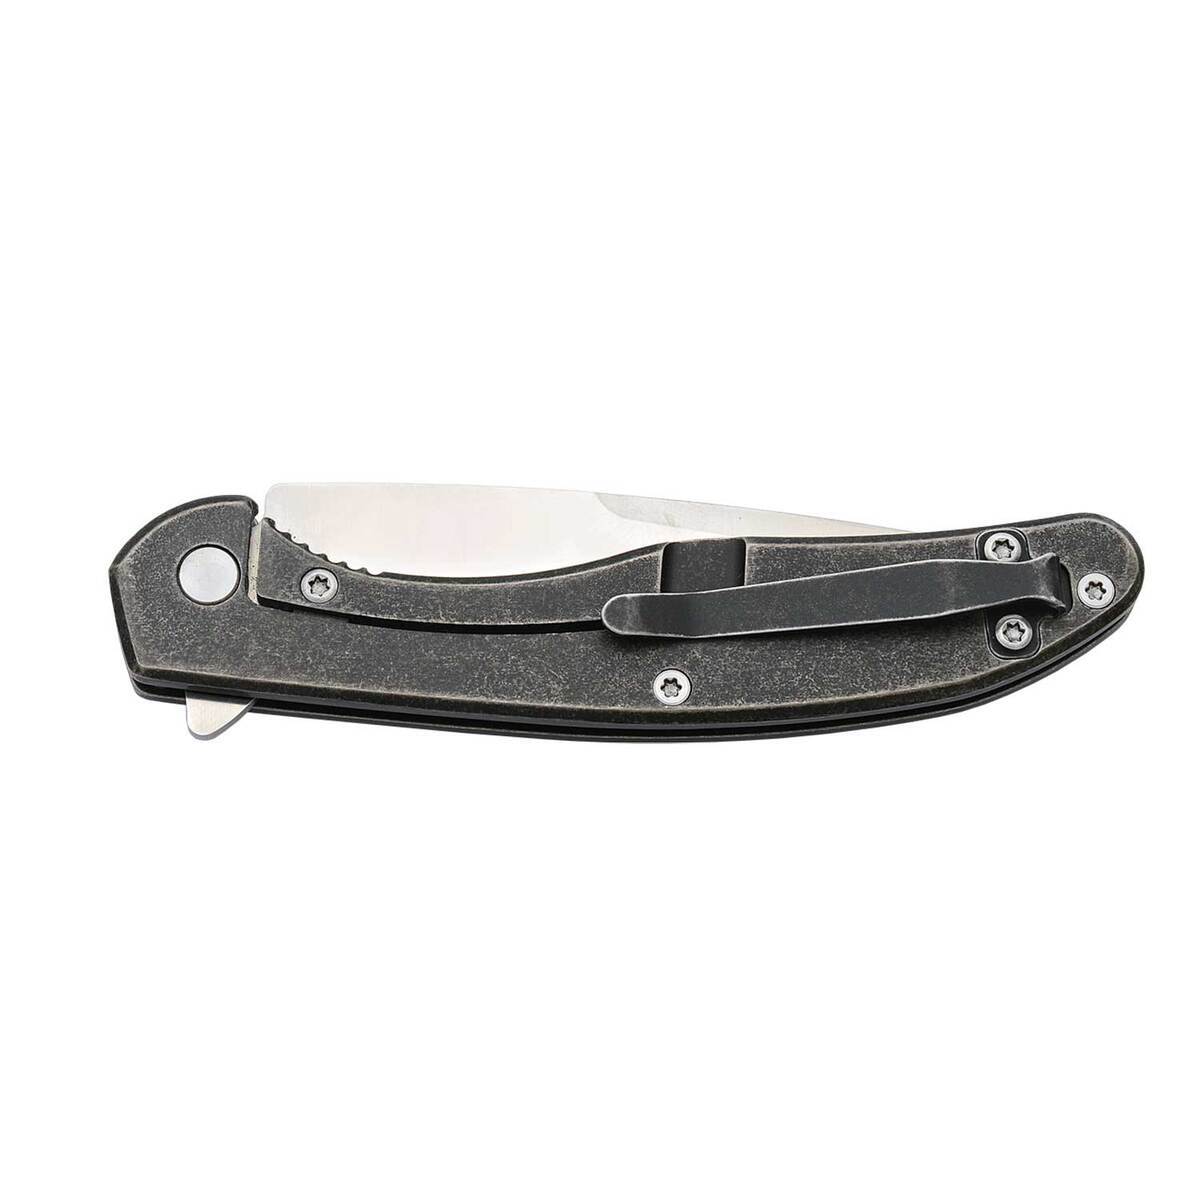 Bear & Son Rancor Executive VIII 2.75 inch Folding Knife | Sportsman's ...